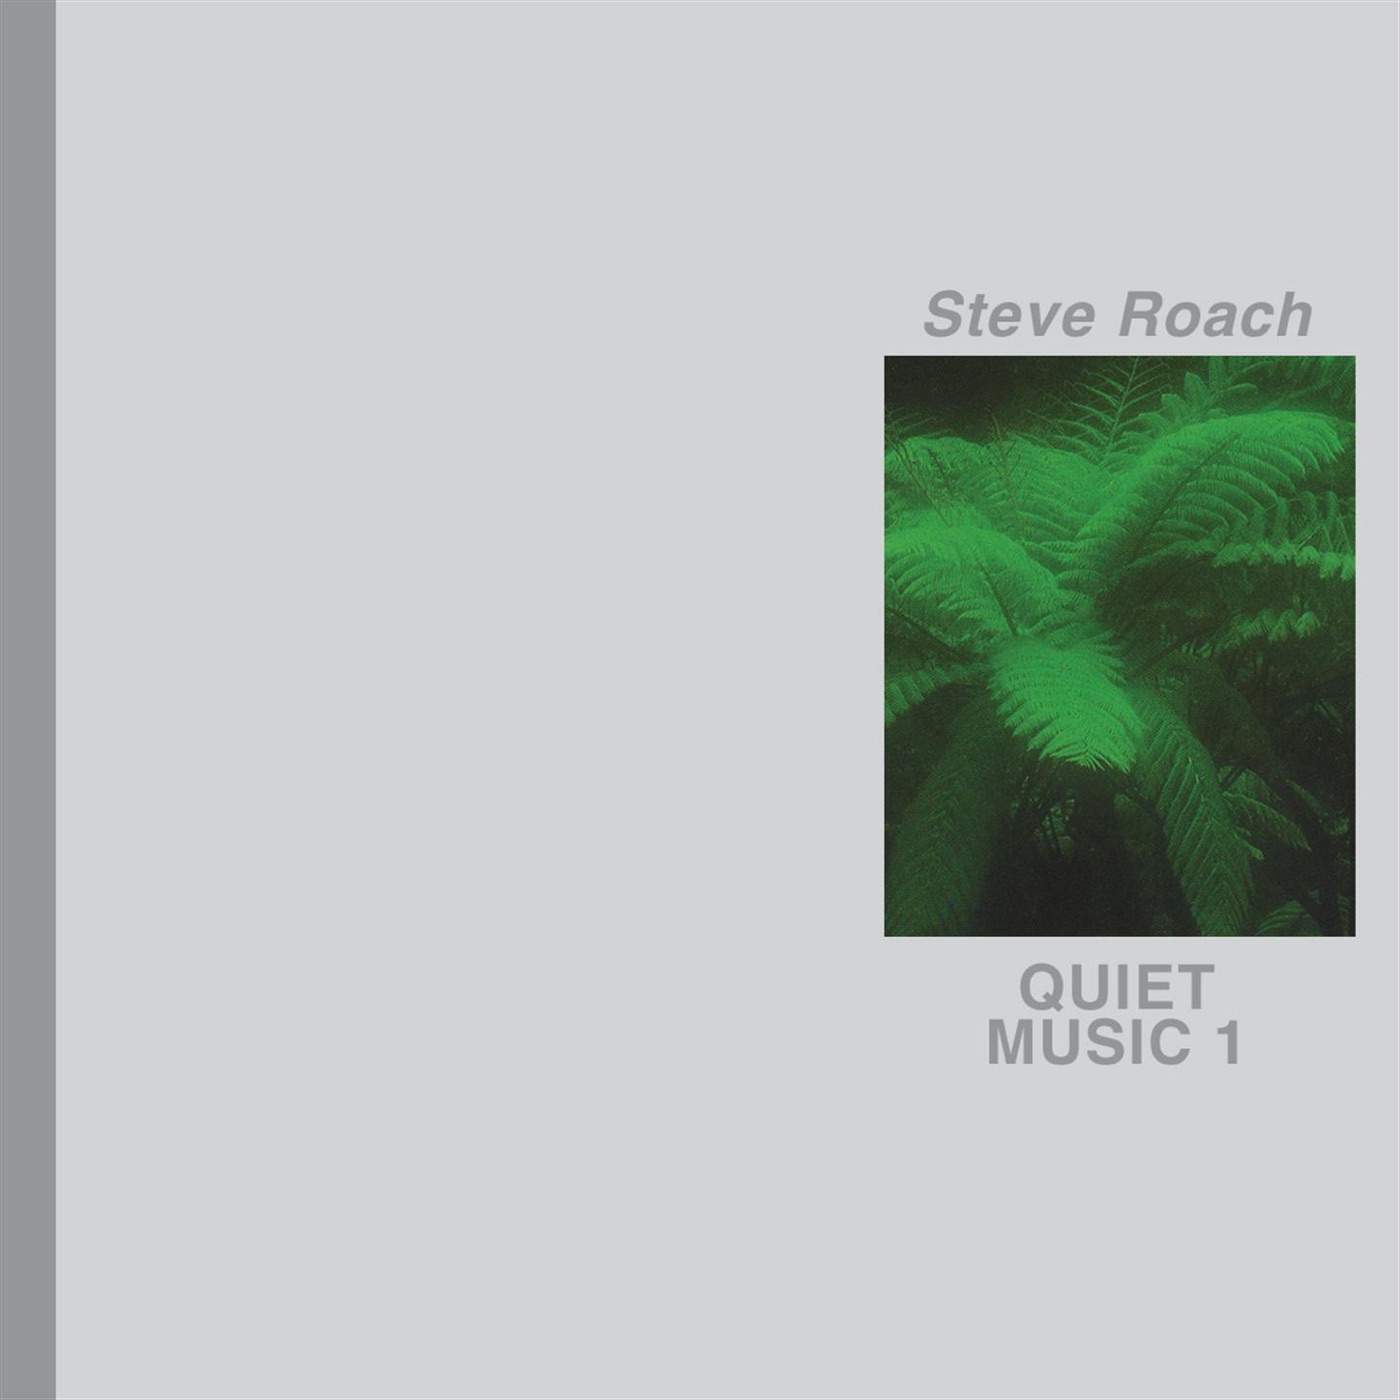 Quiet Music 1 by Steve Roach